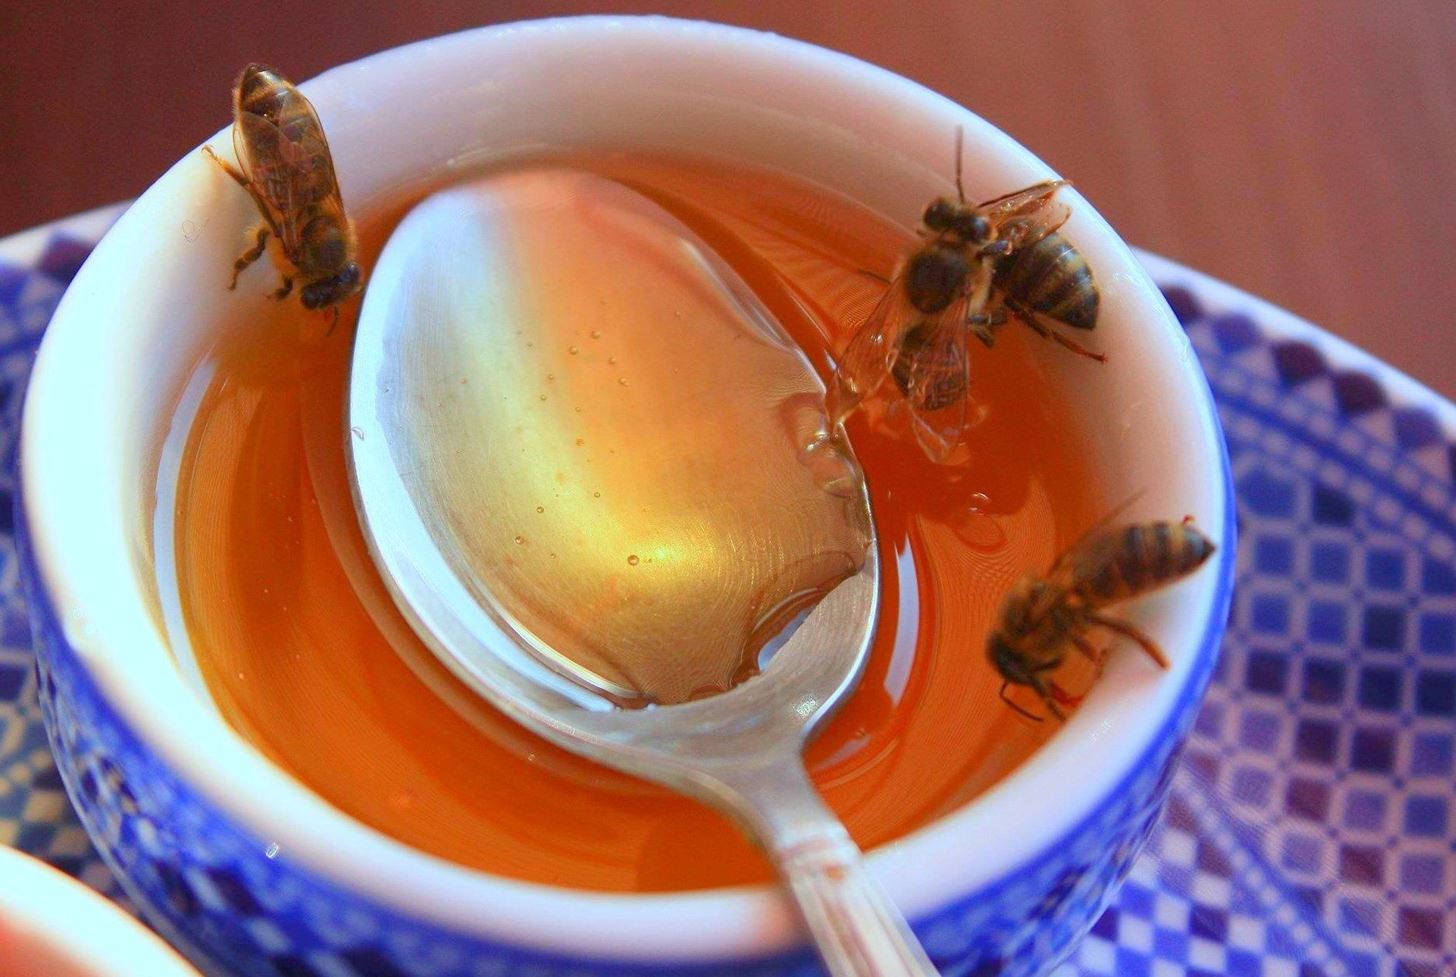 How to Make a Homemade Bee & Wasp Trap (Kill or No-Kill)